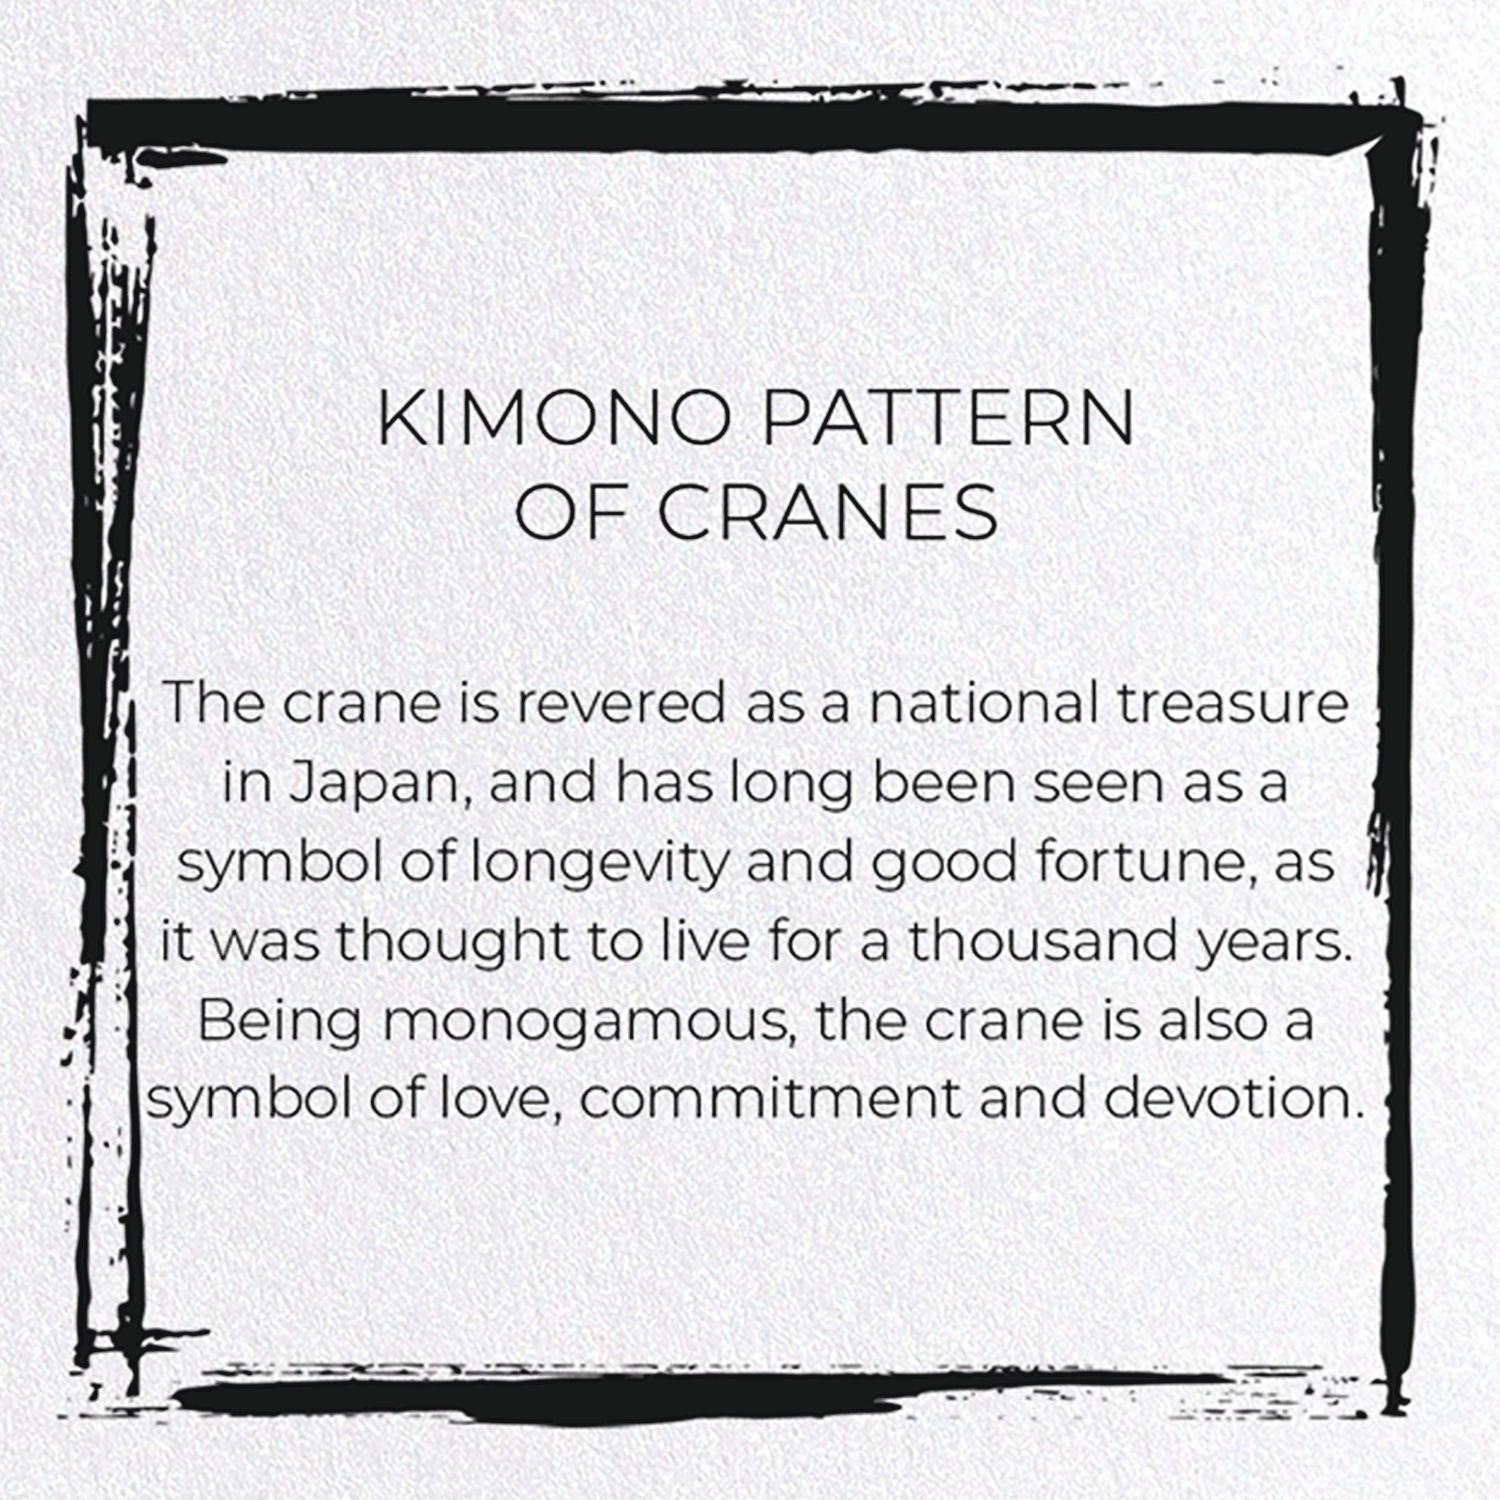 KIMONO PATTERN OF CRANES